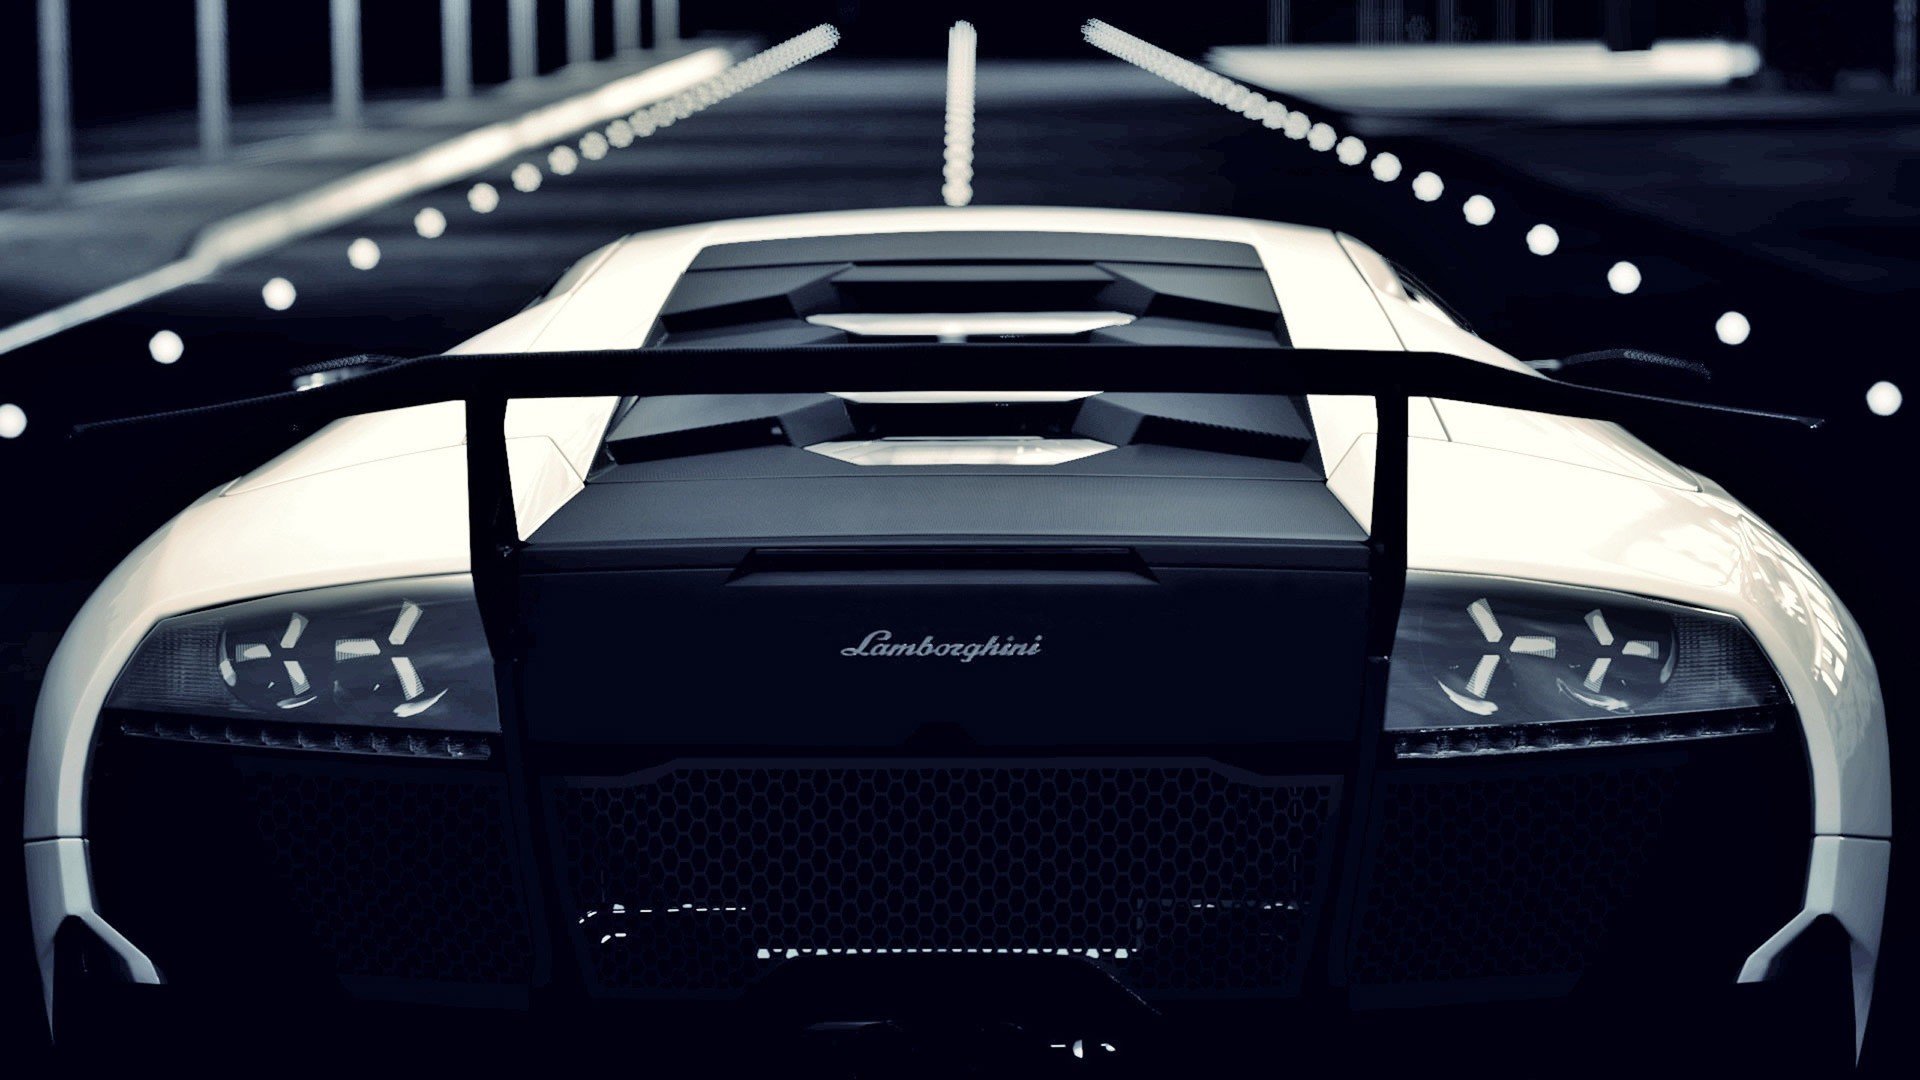 Fondos de pantalla Lamborghini Murcielago Blanco y Negro